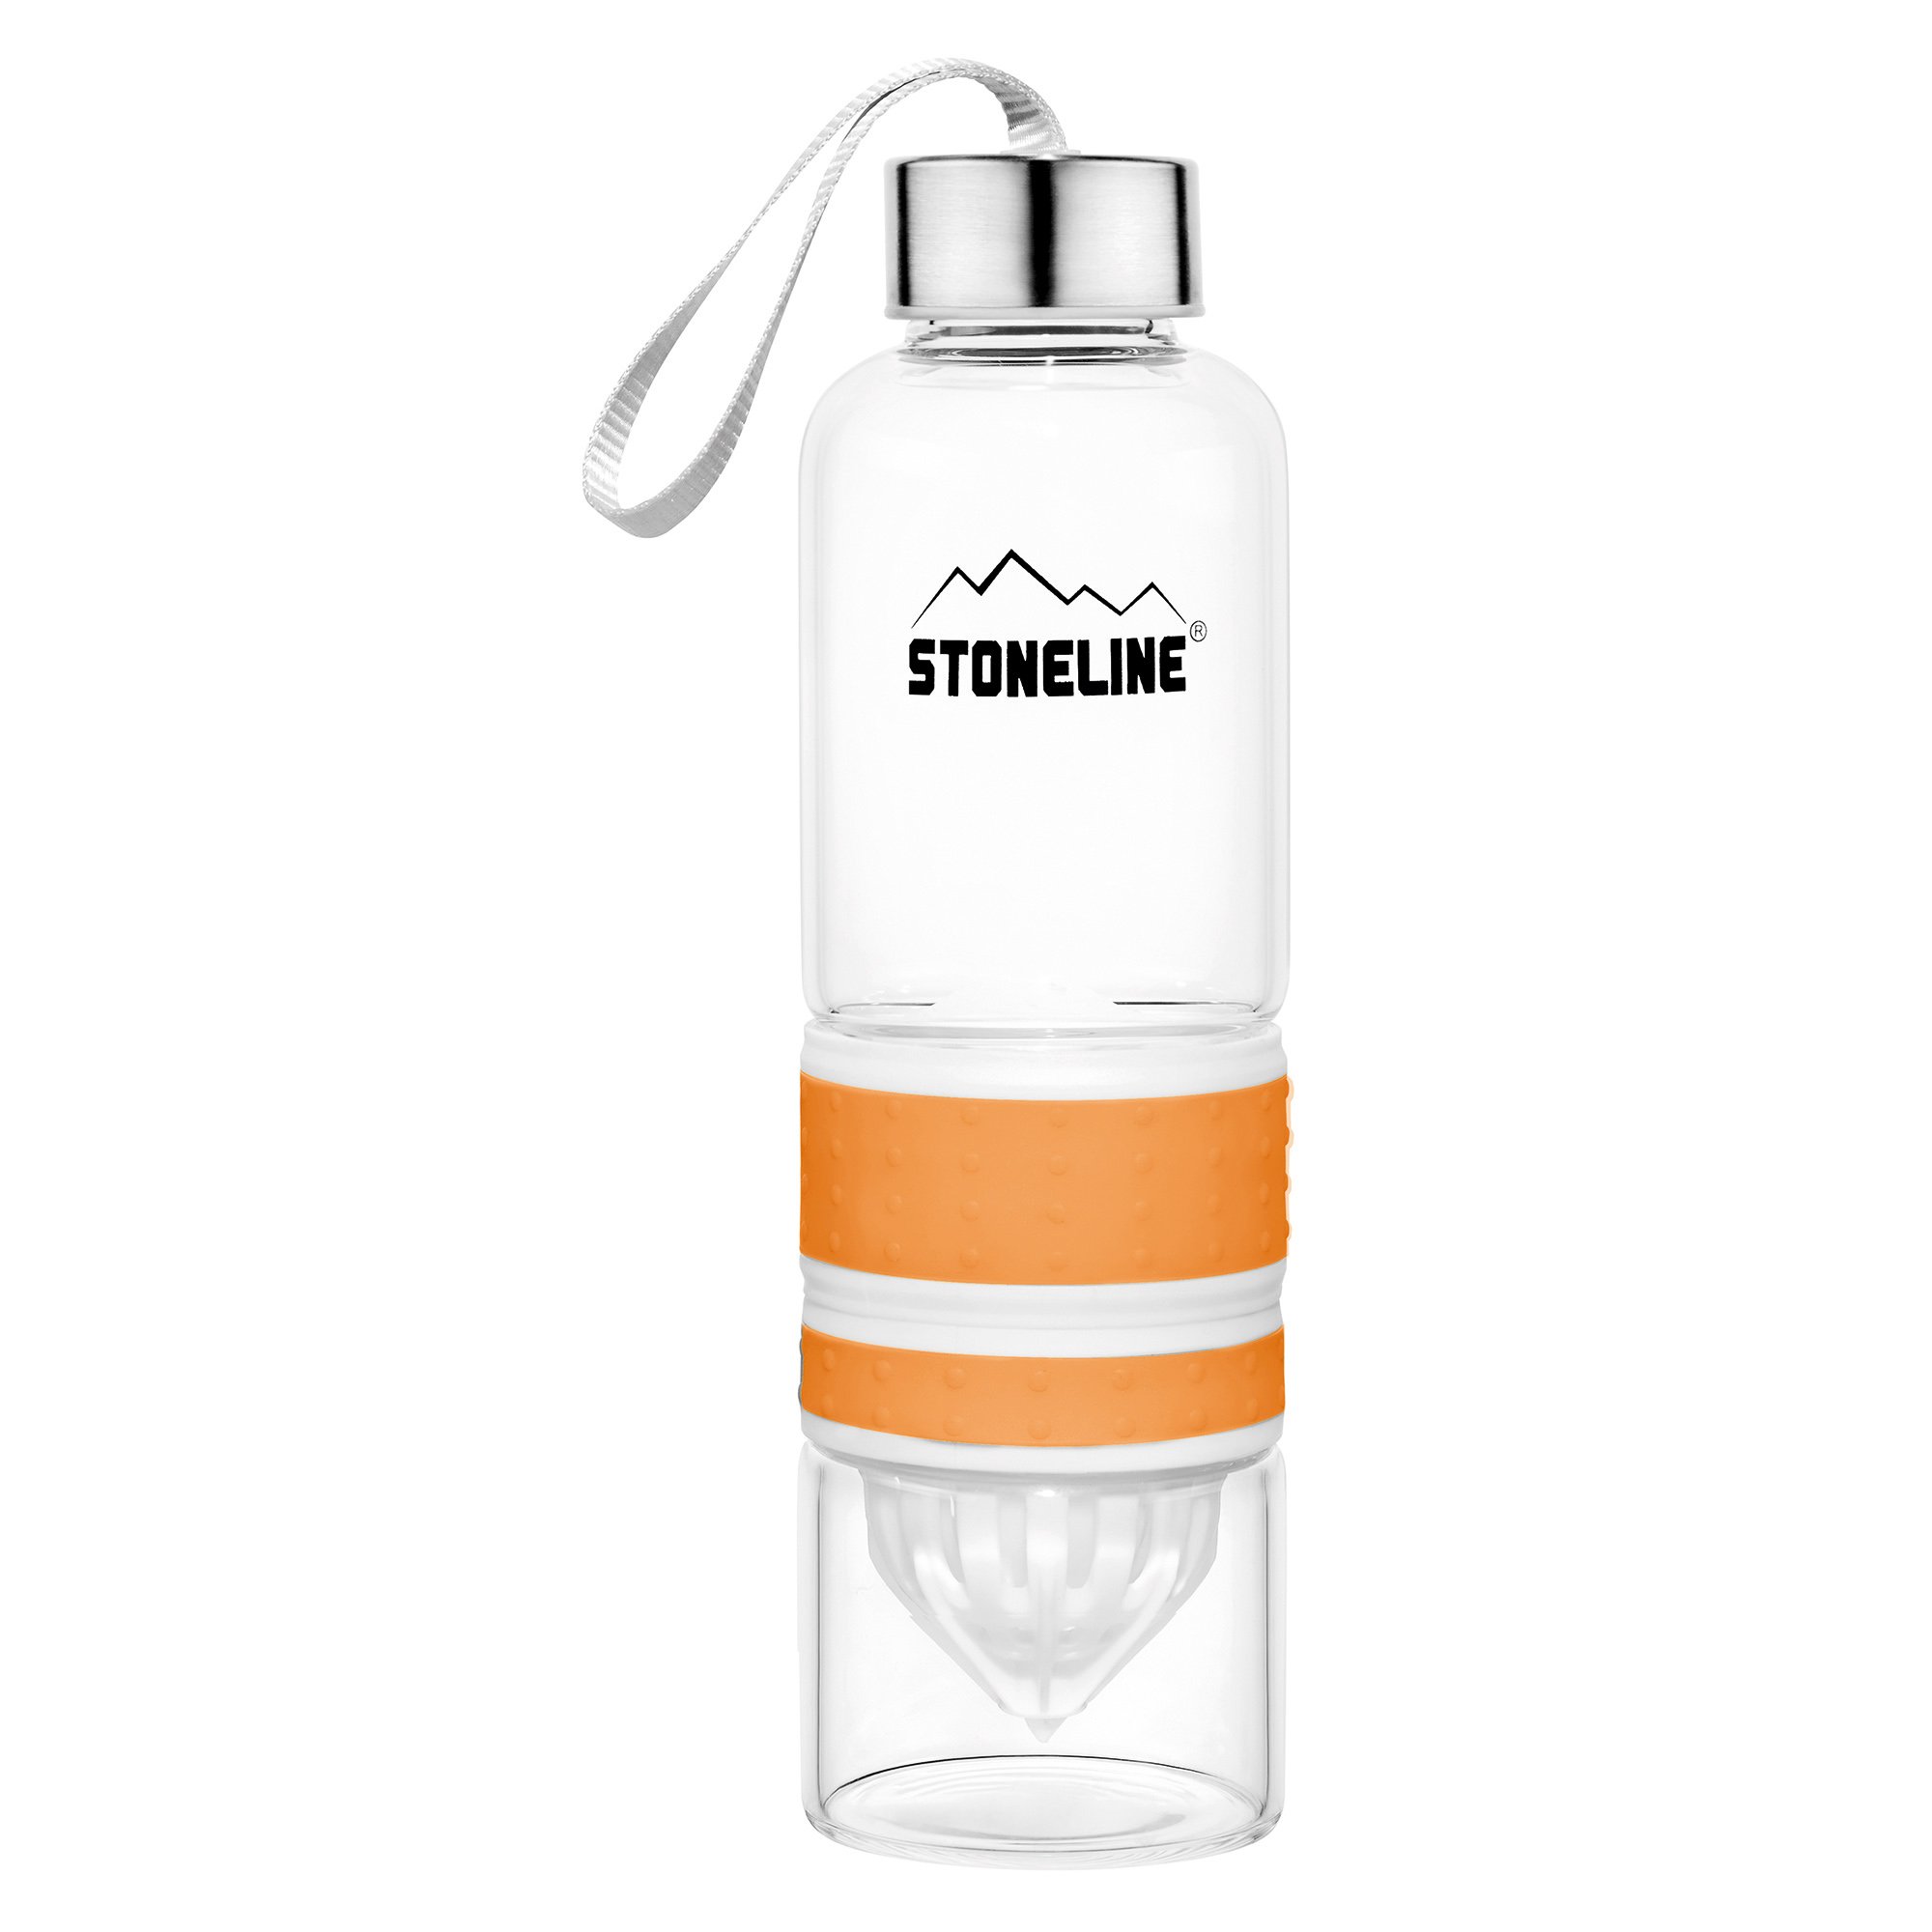 STONELINE® 2 in 1 Drinking Bottle with Juicer, orange